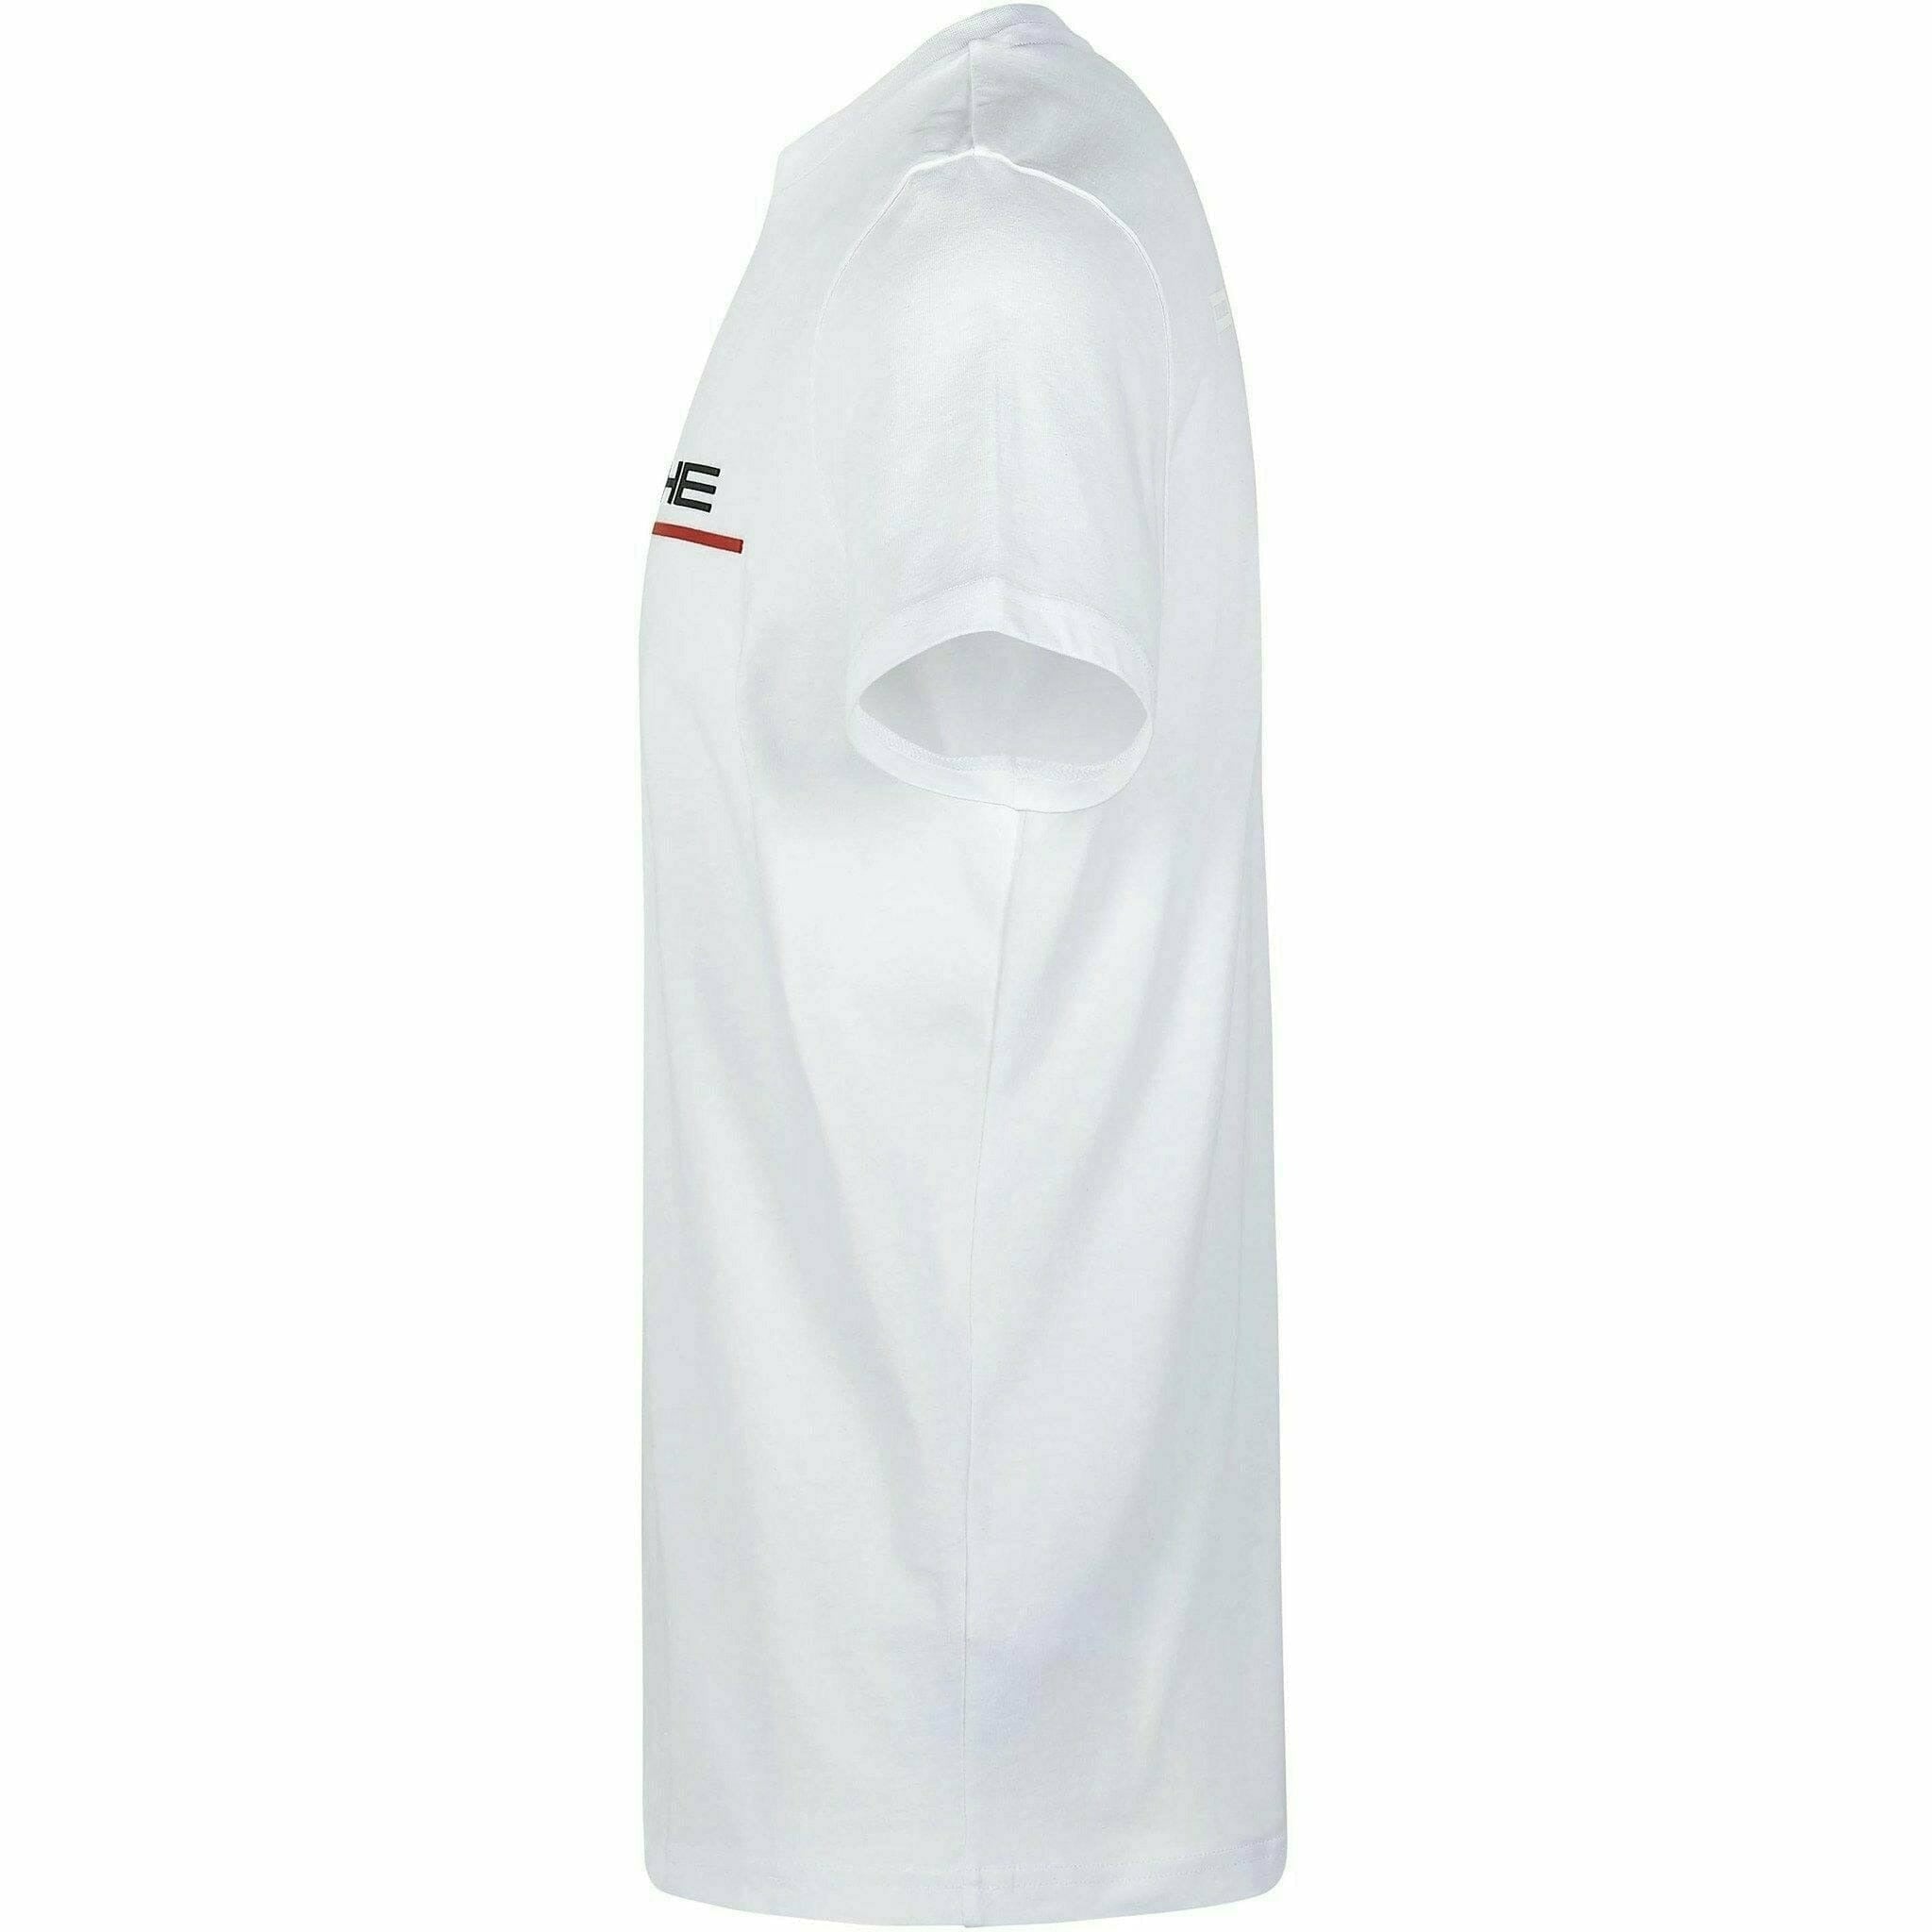 Porsche Motorsport Men's White T-Shirt